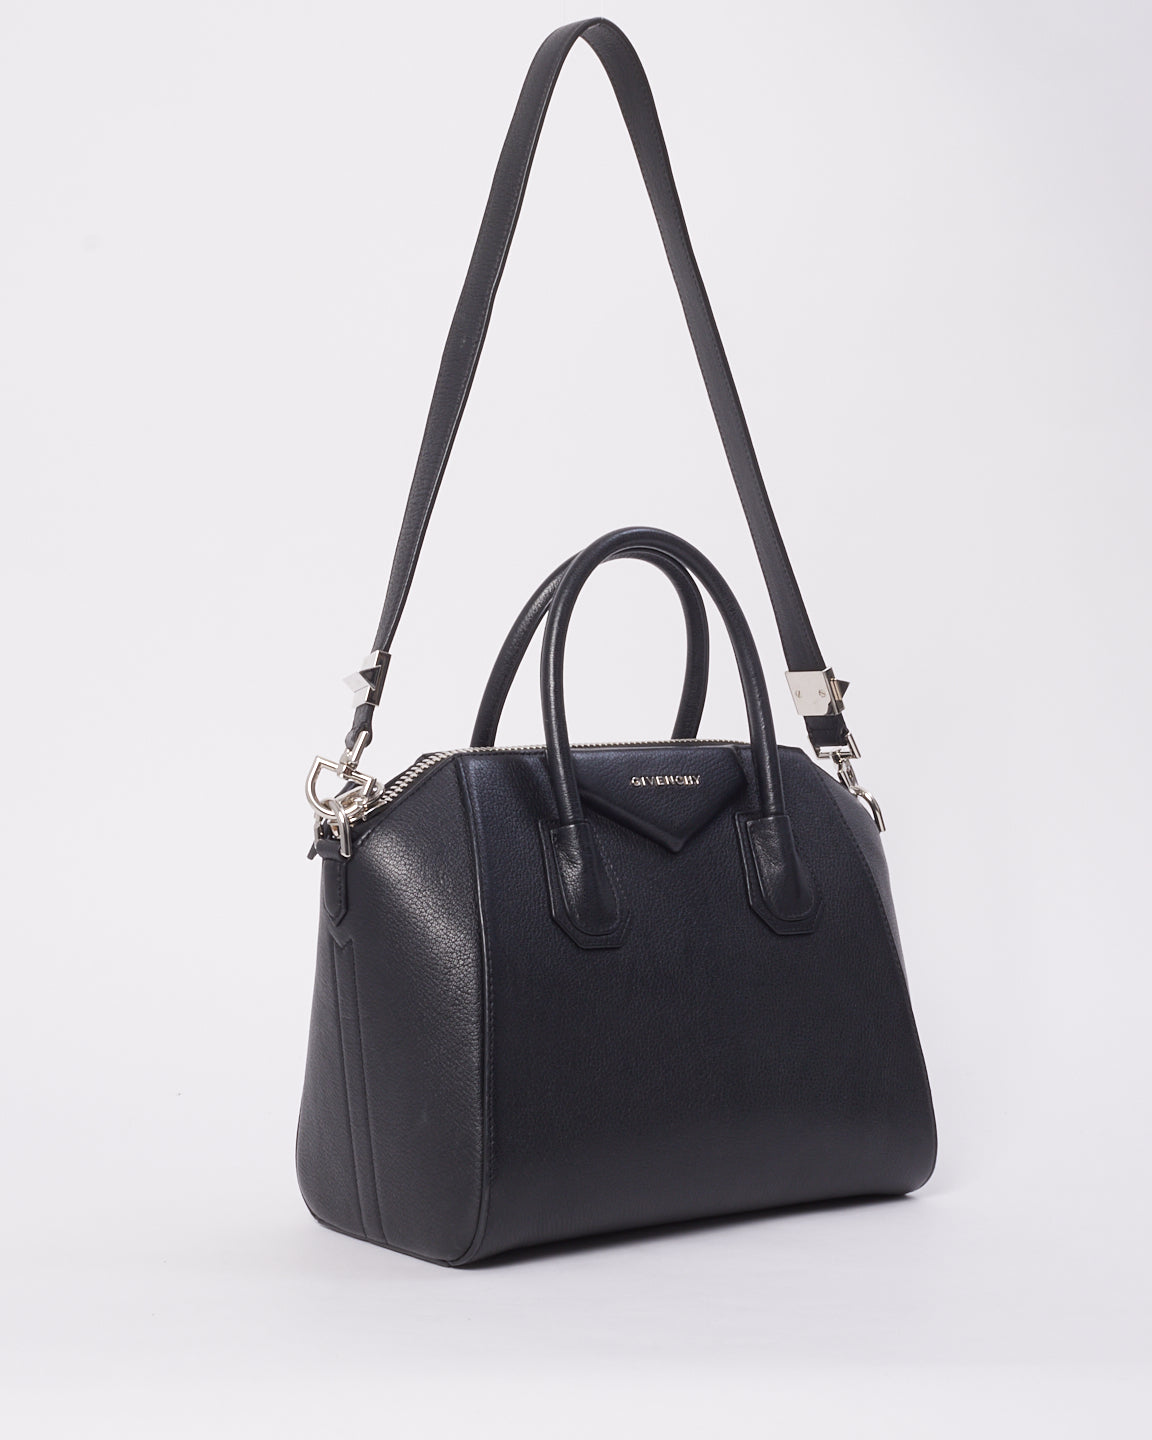 Givenchy Black Leather Antigona Small Tote Bag with Strap